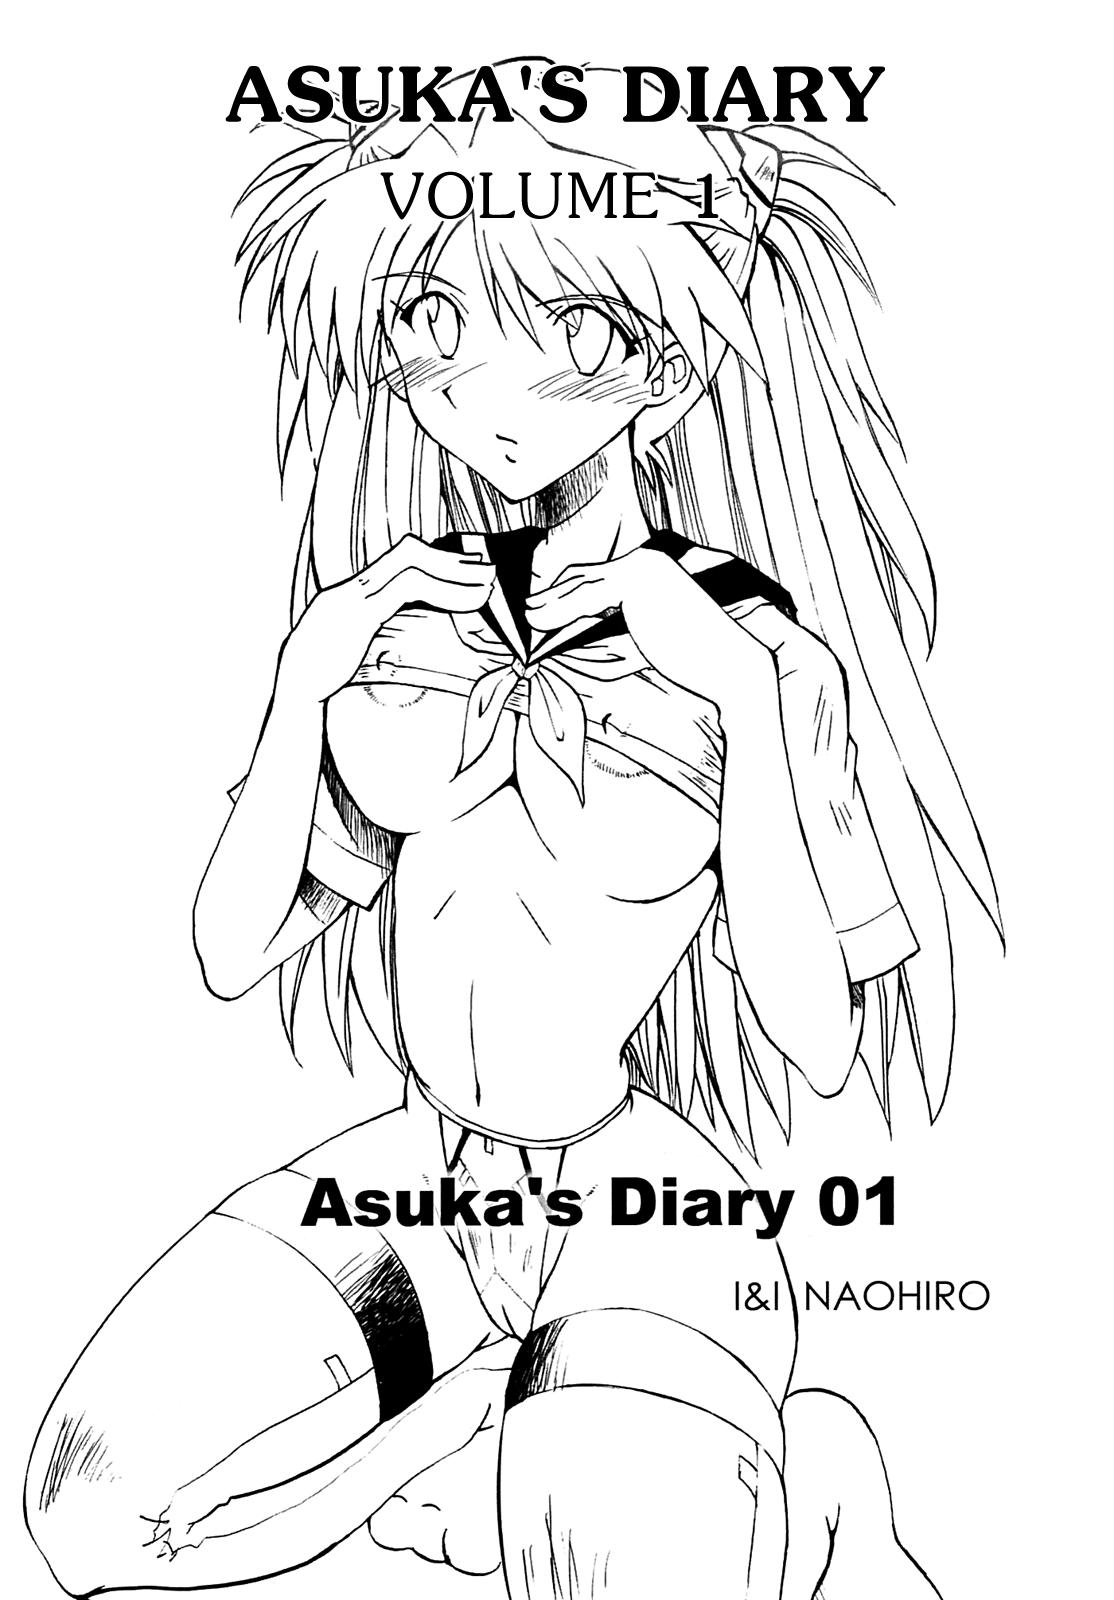 Asuka's Diary 01 3